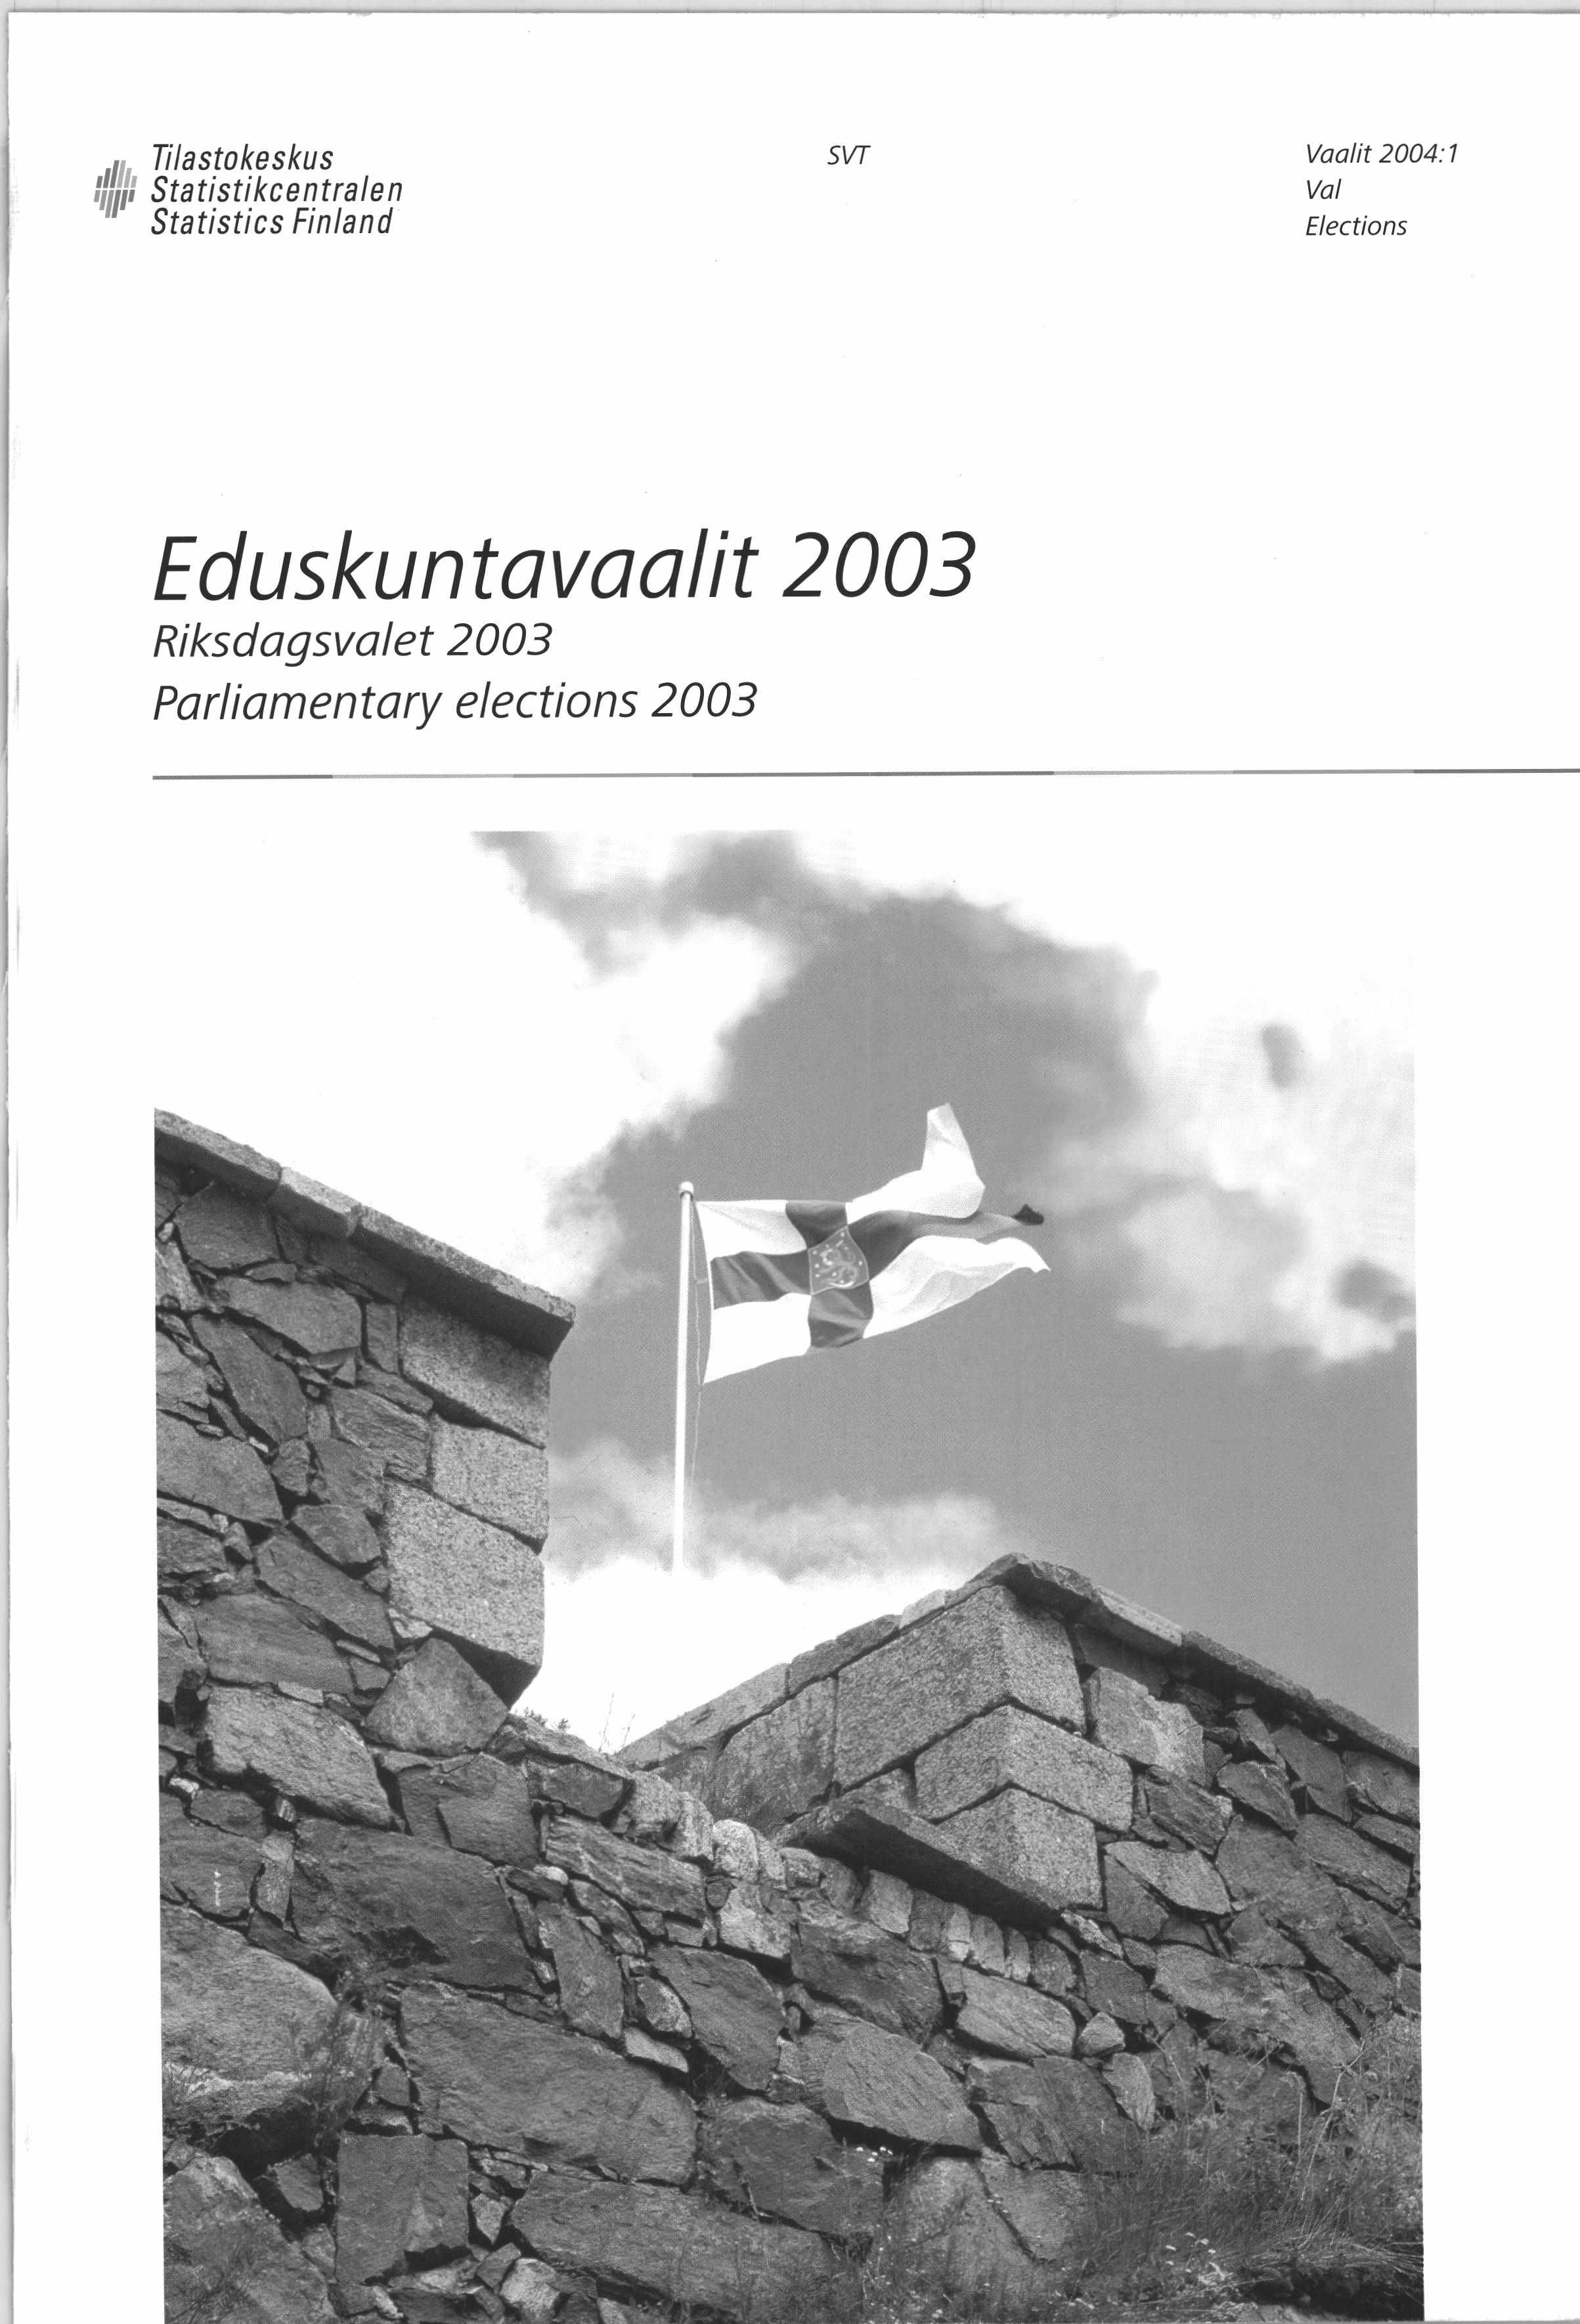 I Tilastokeskus i Statistikcentralen Statistics Finland SVT Vaalit 2004:1 Val